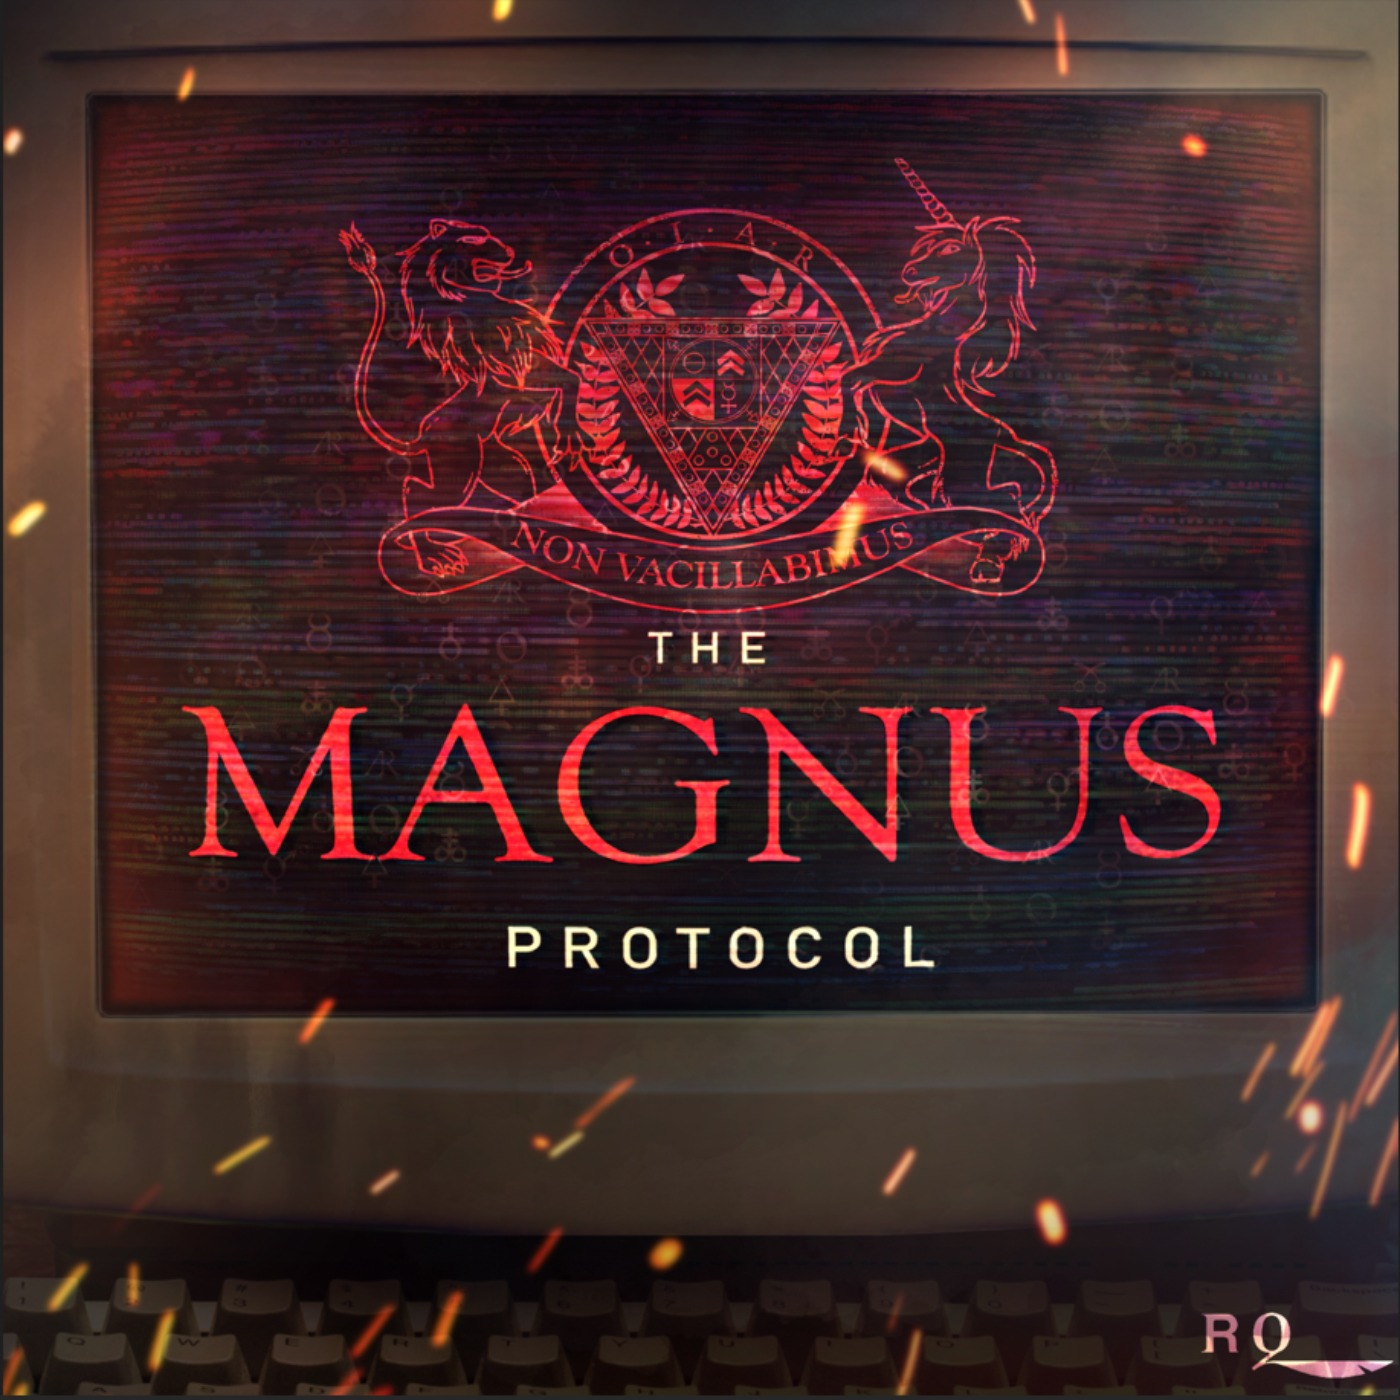 The Magnus Protocol 15 – Well Run